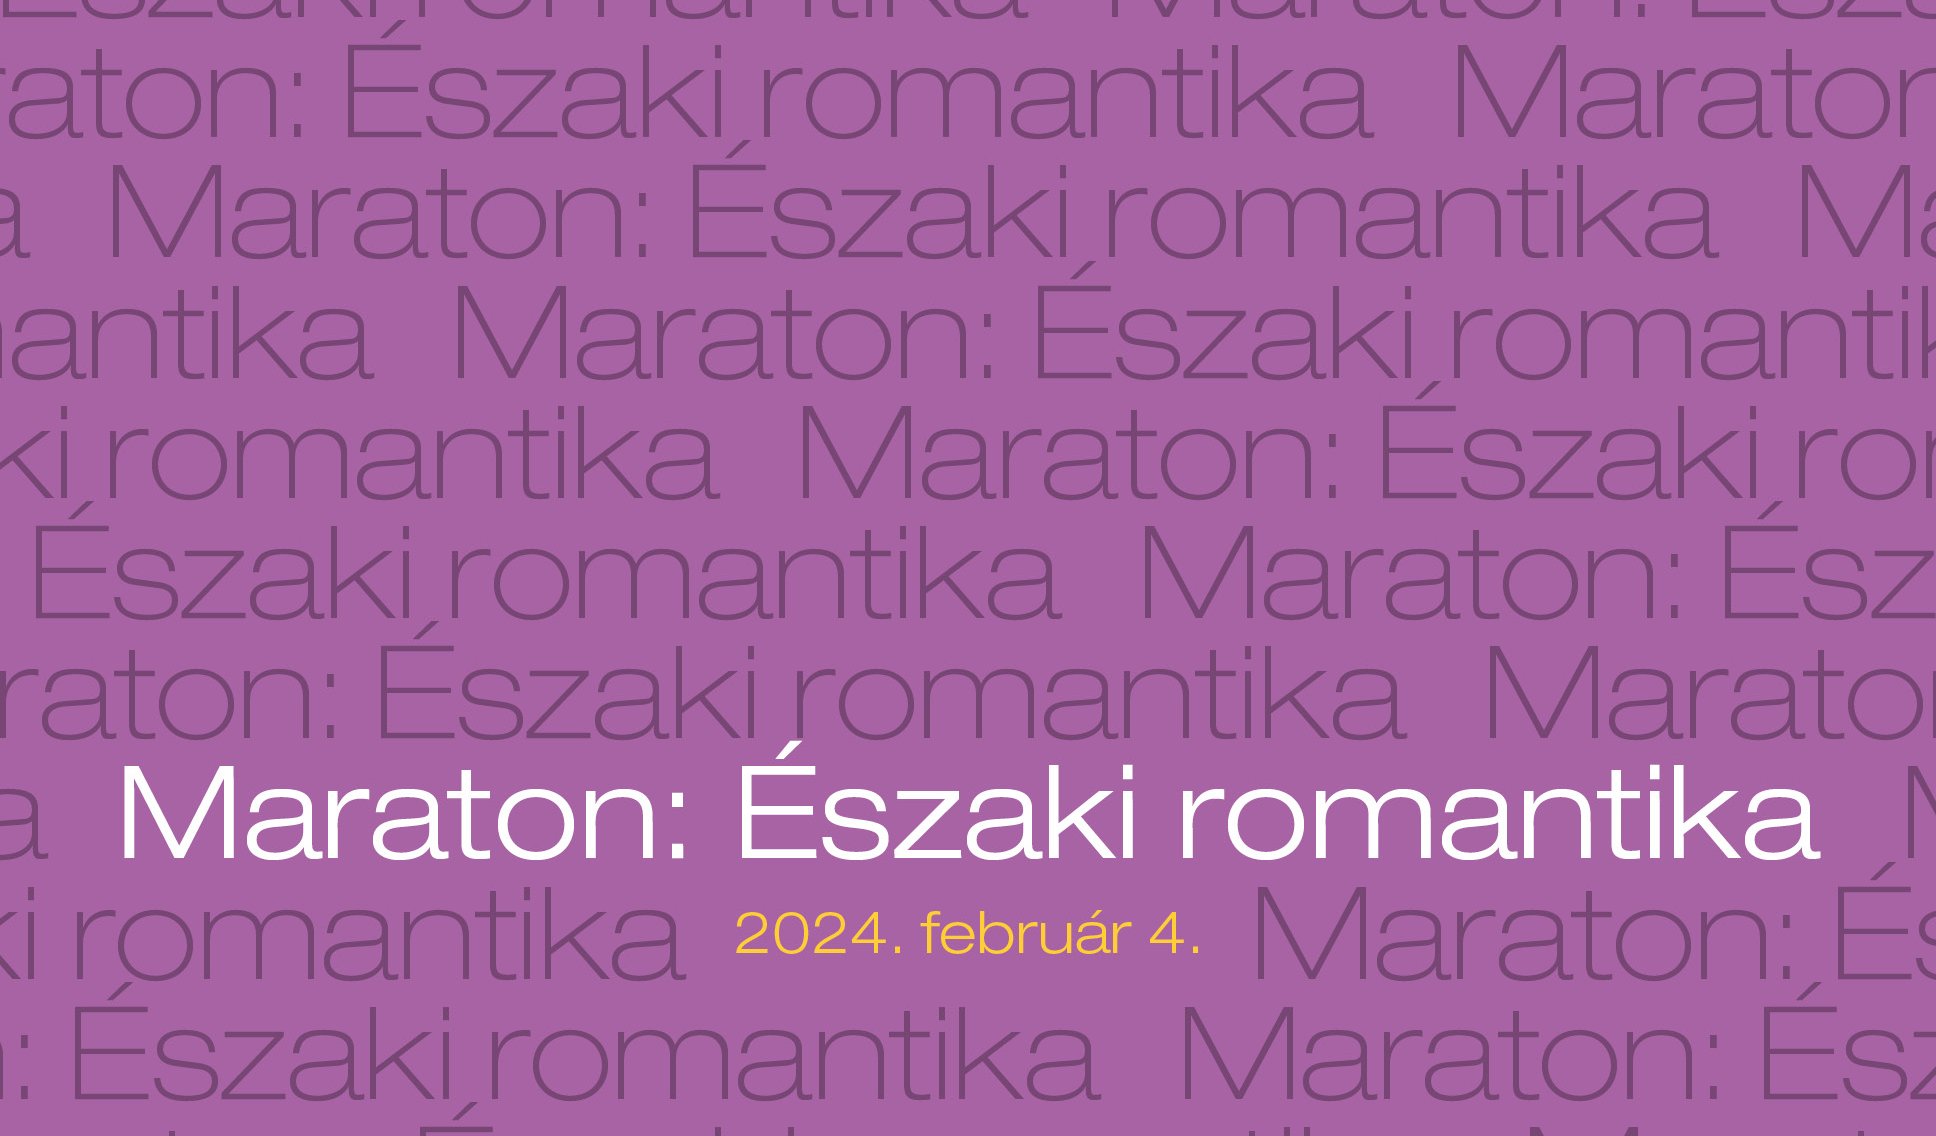 Maraton-Eszaki_romantika-instagram 1936x1936px.jpg